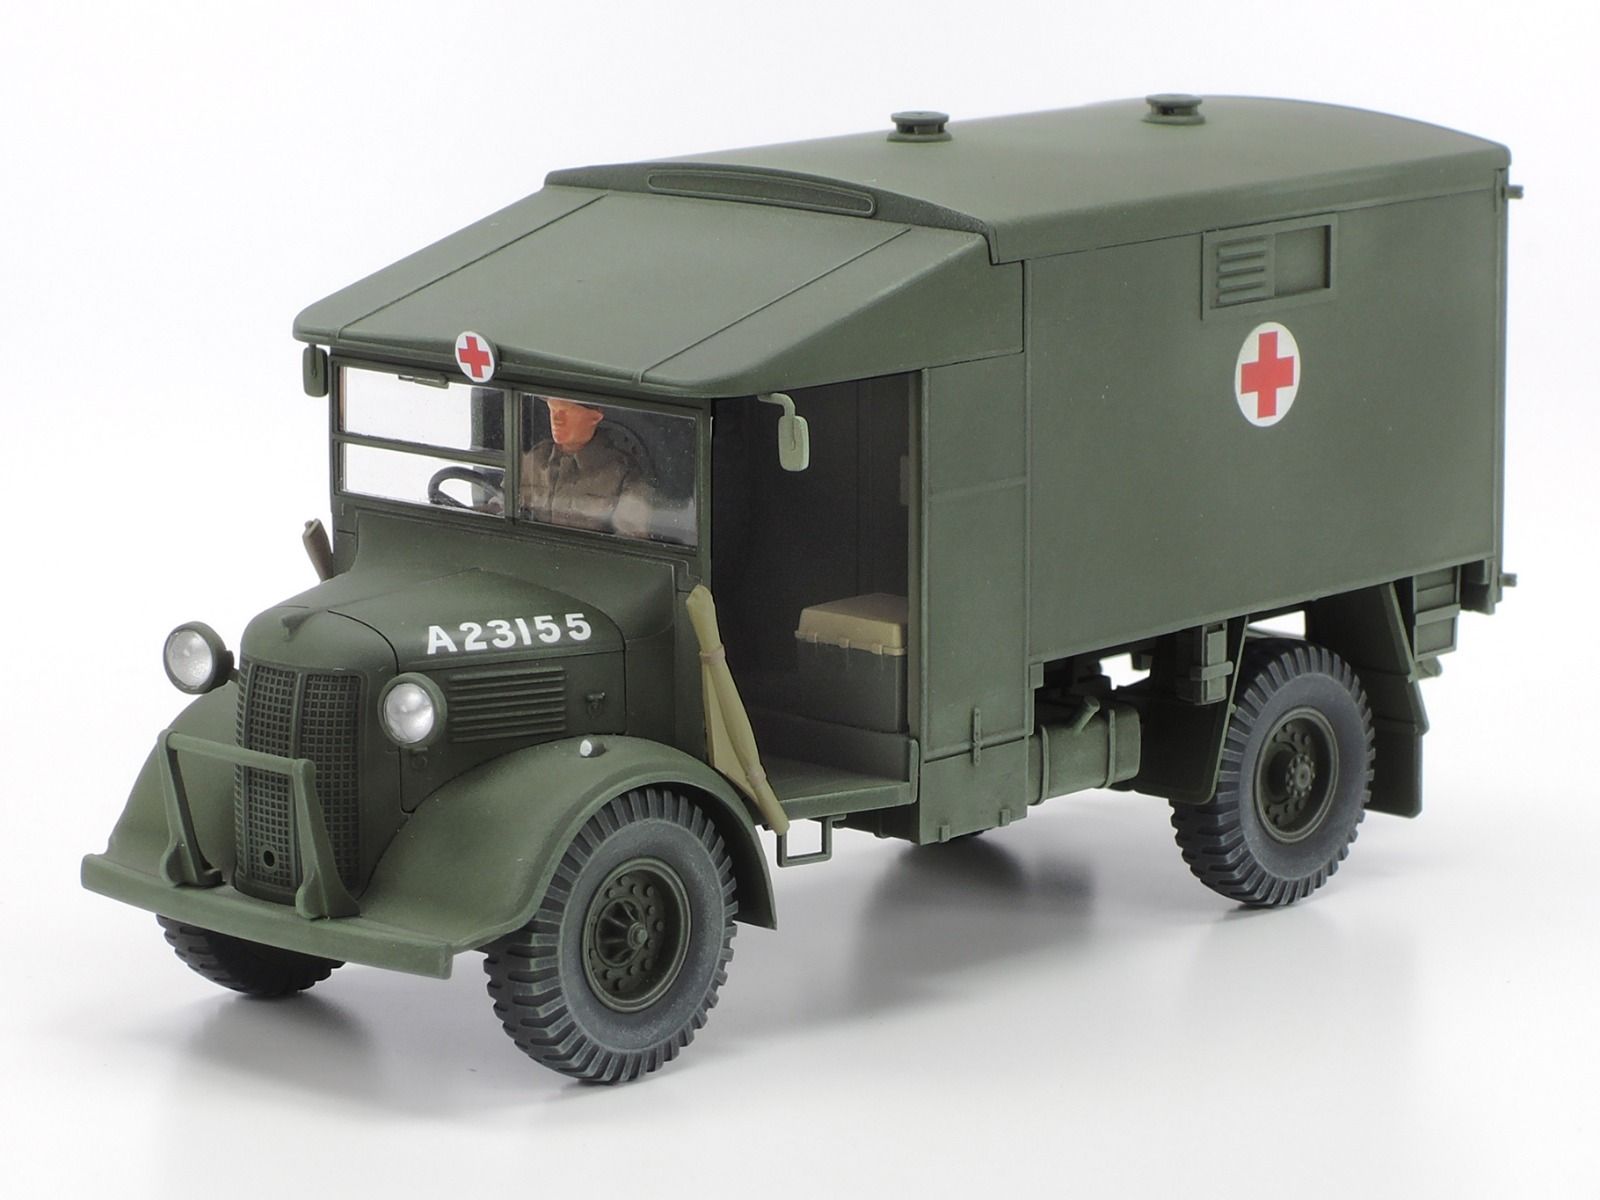 Tamiya 1/48 Scale British 2t 4x2 Ambulance Model Kit